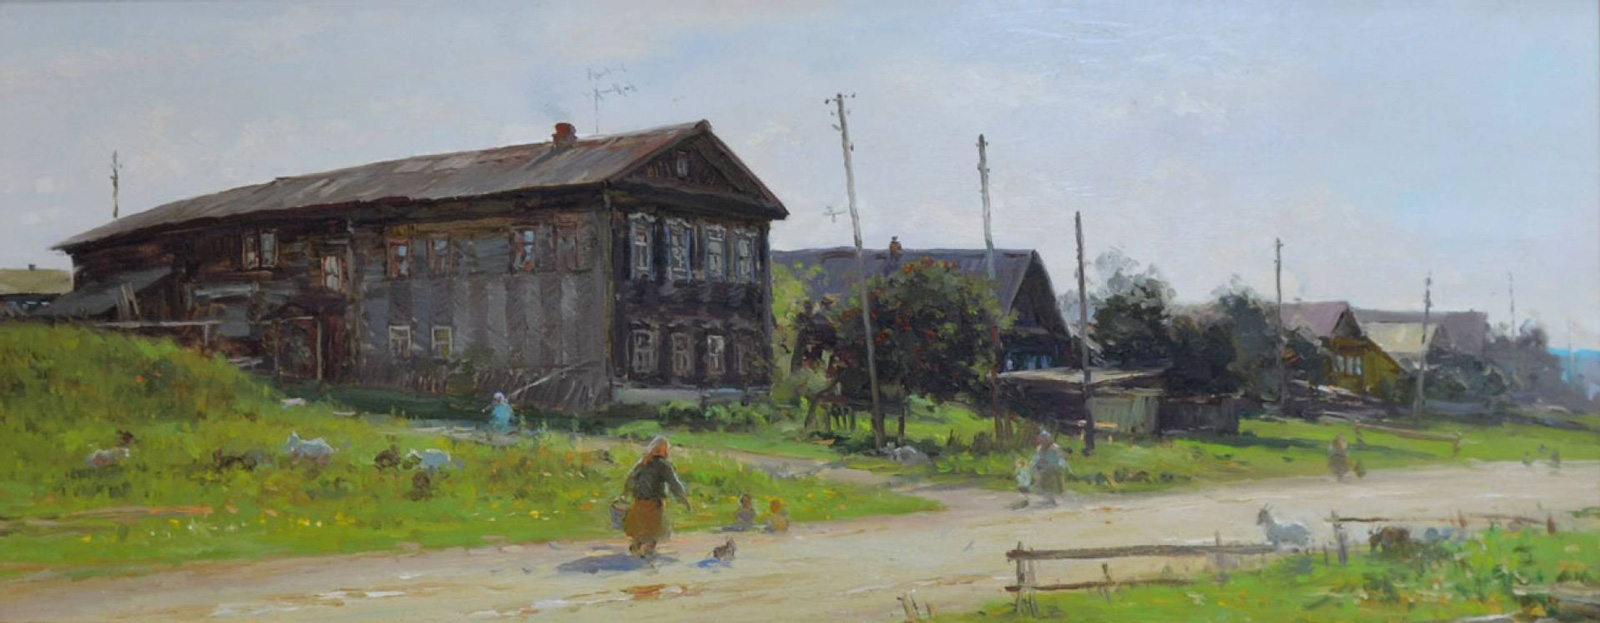 On the Street in Staroutkinsk - 1, Rustem Khuzin, Buy the painting Oil